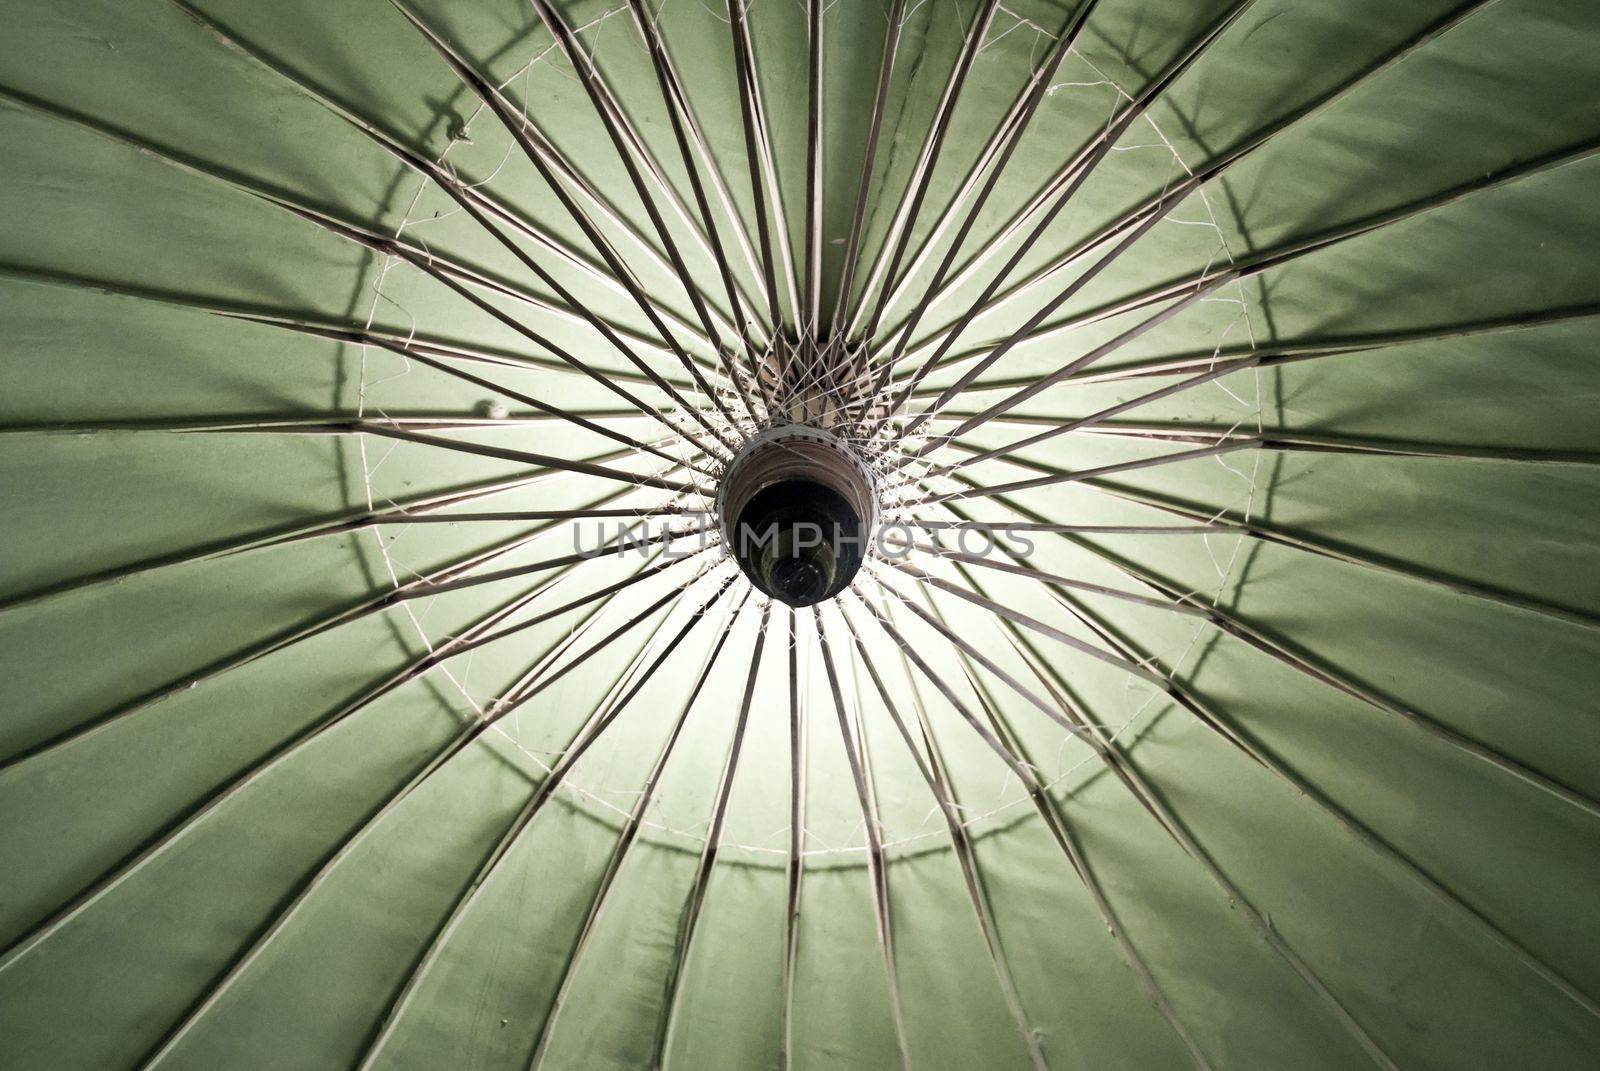 Under green umbrella with lighting downlight, vintage tone